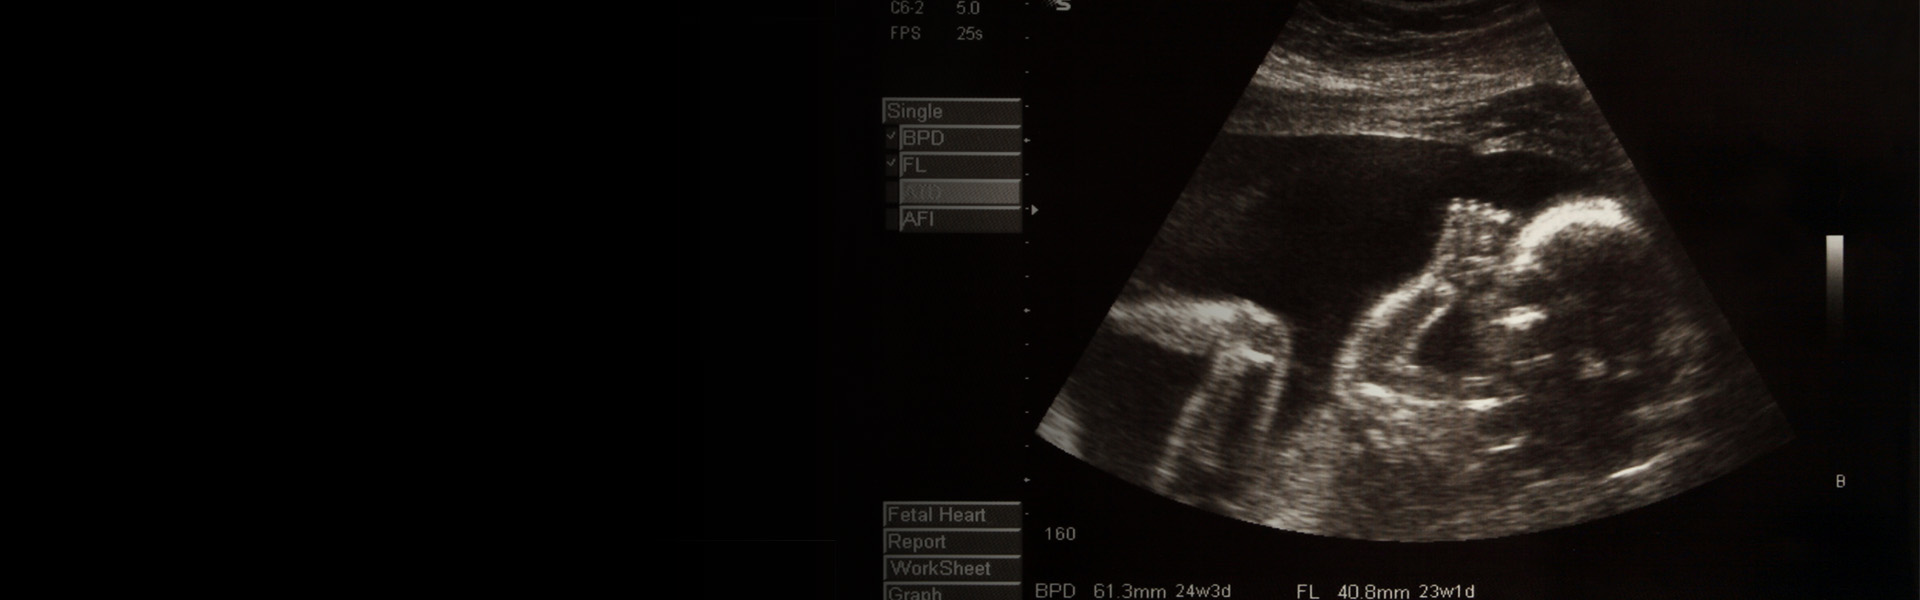 An ultrasound of a baby